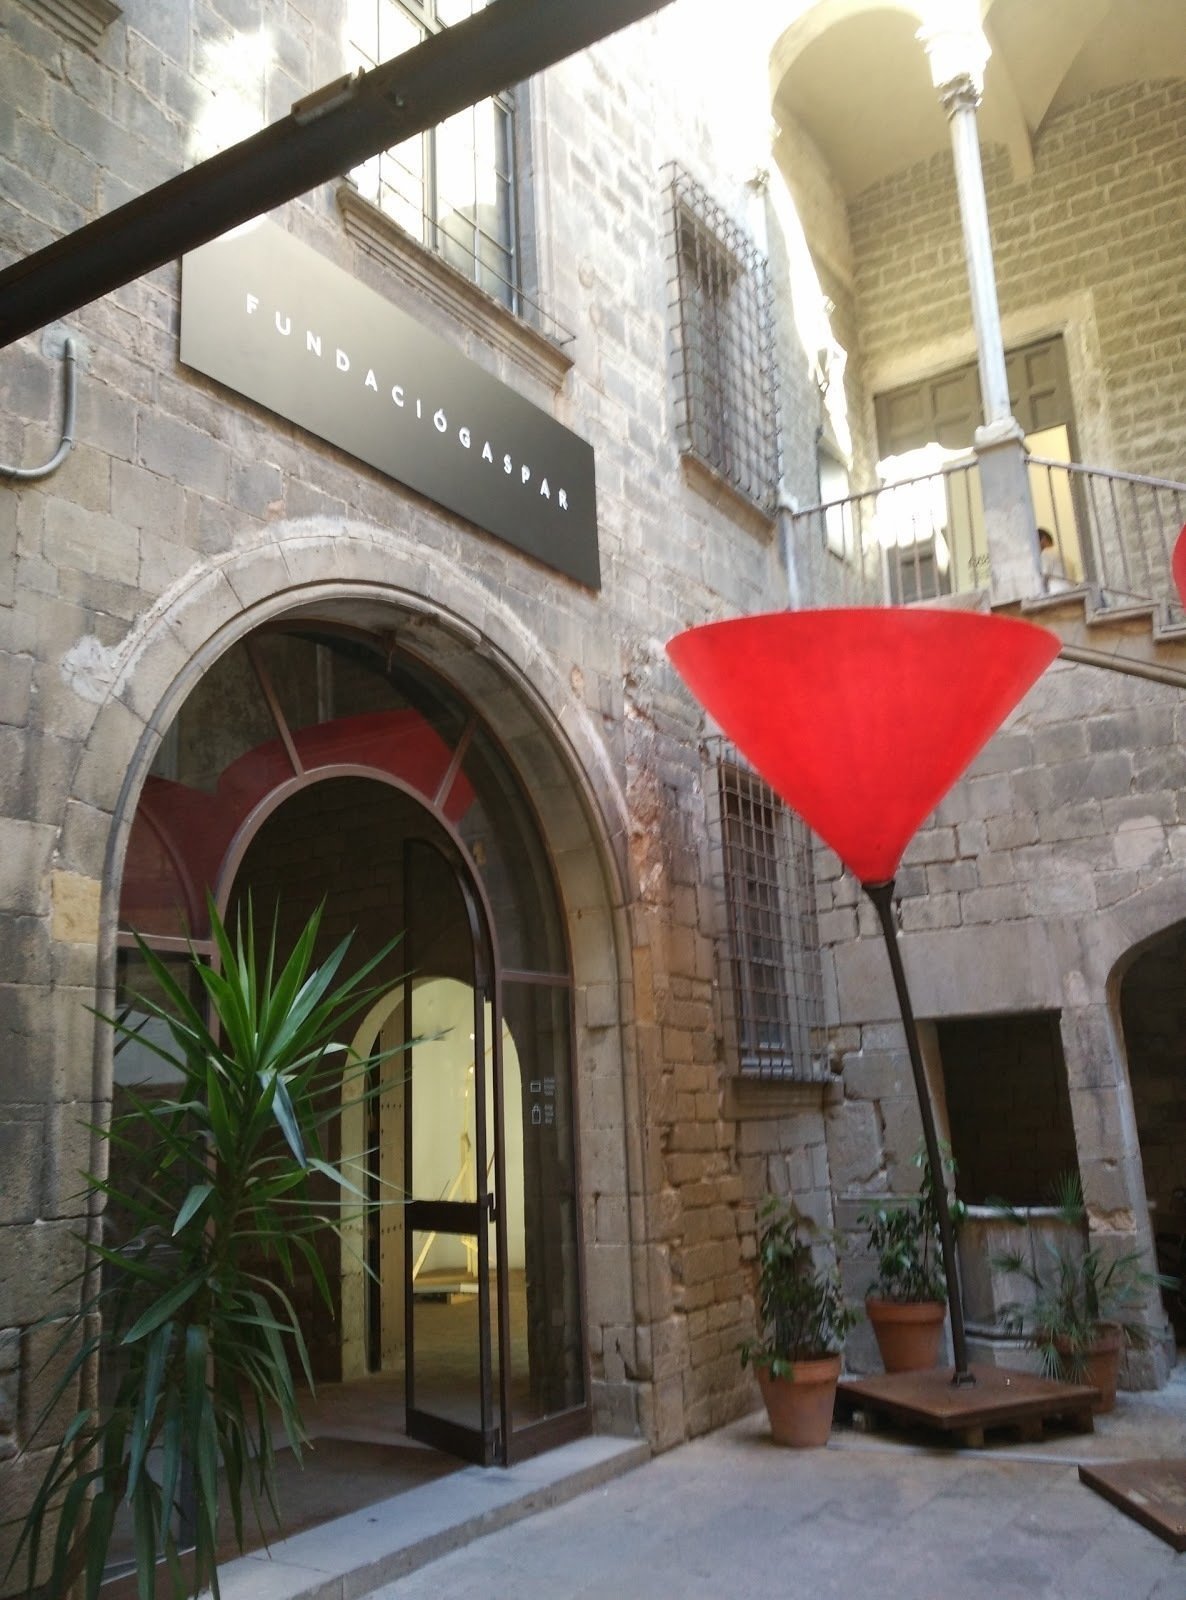 Fundació Gaspar: A Work-Friendly Place in Barcelona